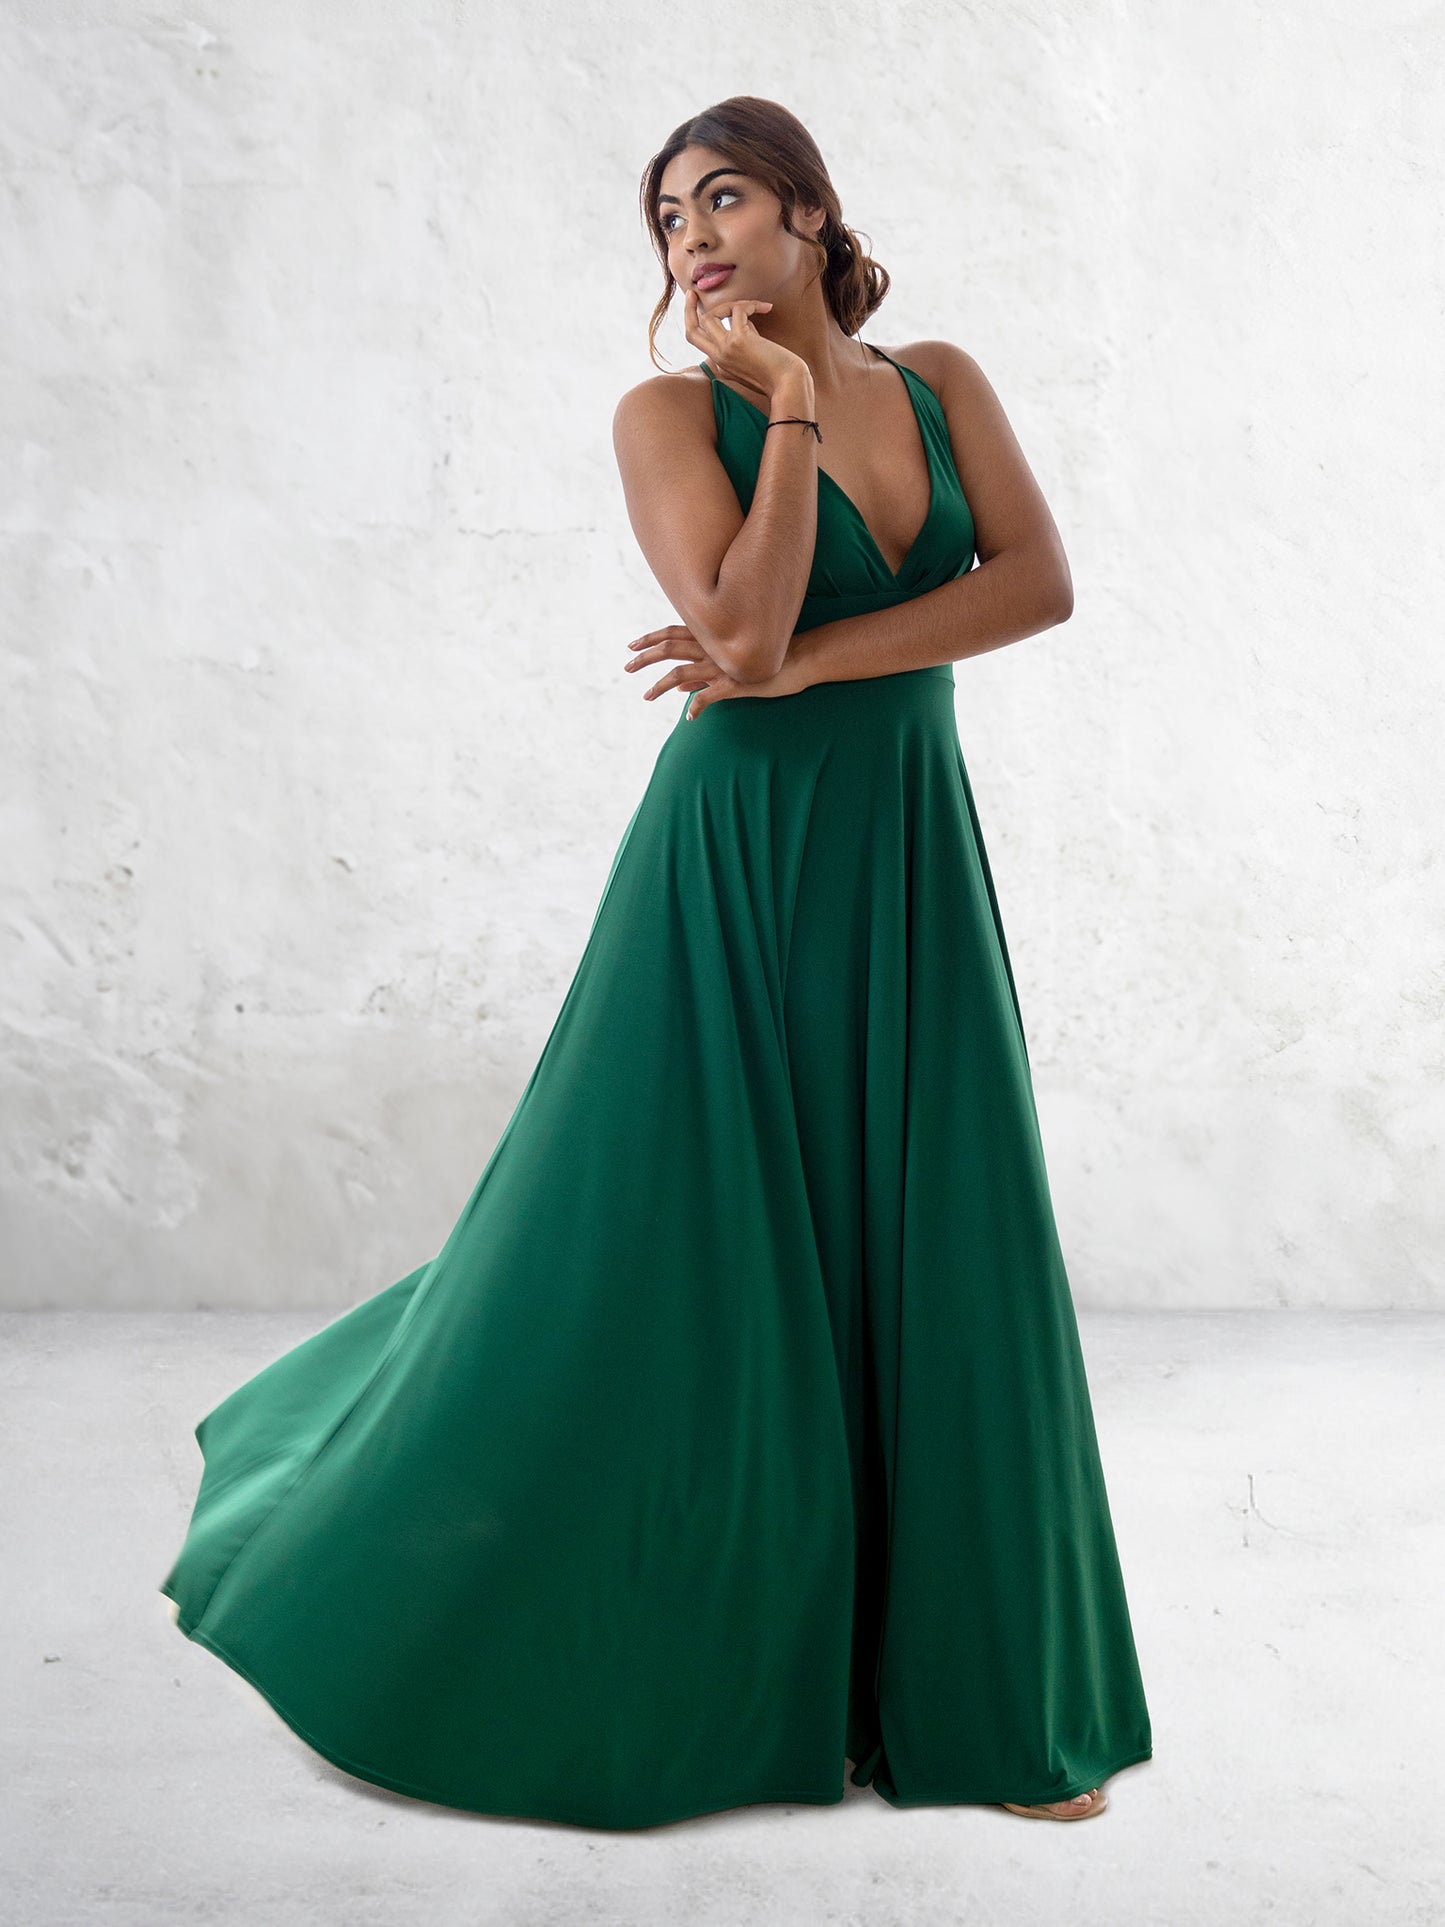 Nyx  Formal Dress - Emerald Green